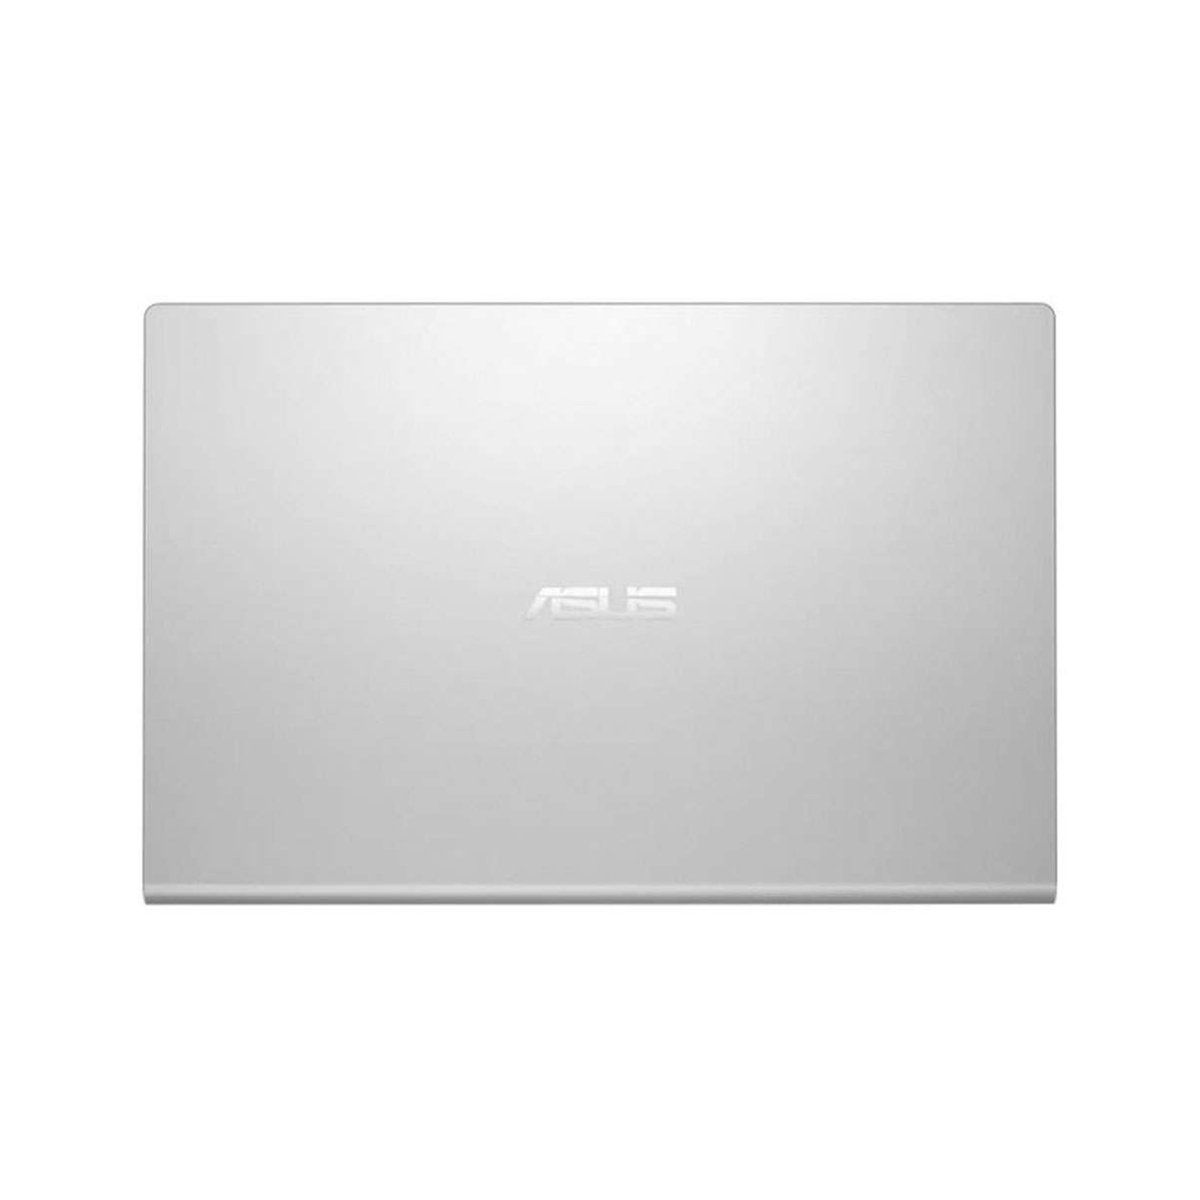 Asus Notebook TP470EZ-EC017T,Intel Core i5,8GB RAM,512GB SSD,4GB VGA,14.0" FHD,Windows 10,Arabic English Keyboard